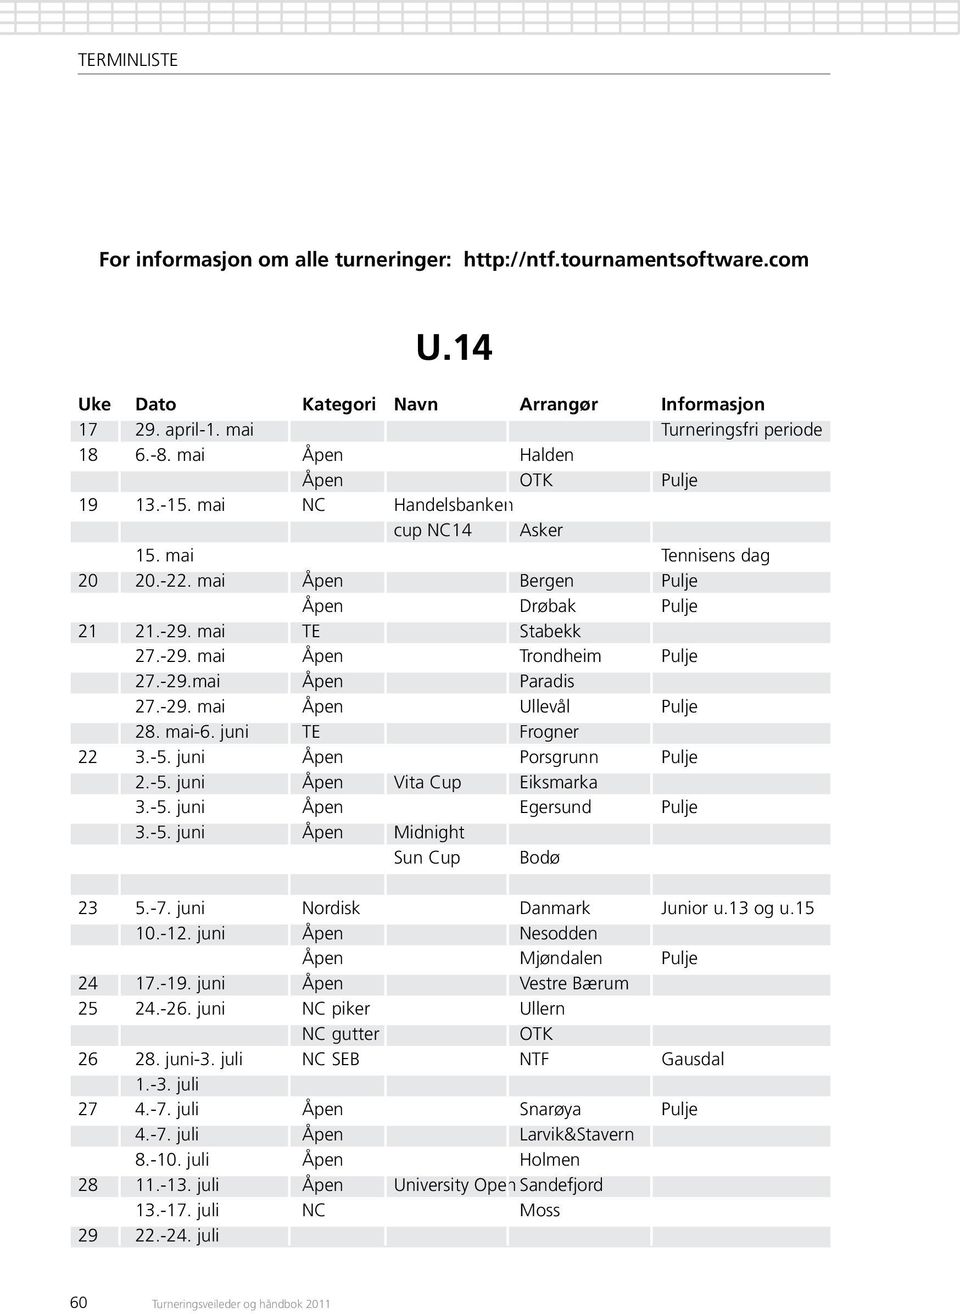 -5. juni Midnight S sun Cup Bodø 23 5.-7. juni nordisk Danmark Junior u.13 og u.15 10.-12. juni N nesodden M mjøndalen Pulje 24 17.-19. juni Vestre Bærum 25 24.-26.